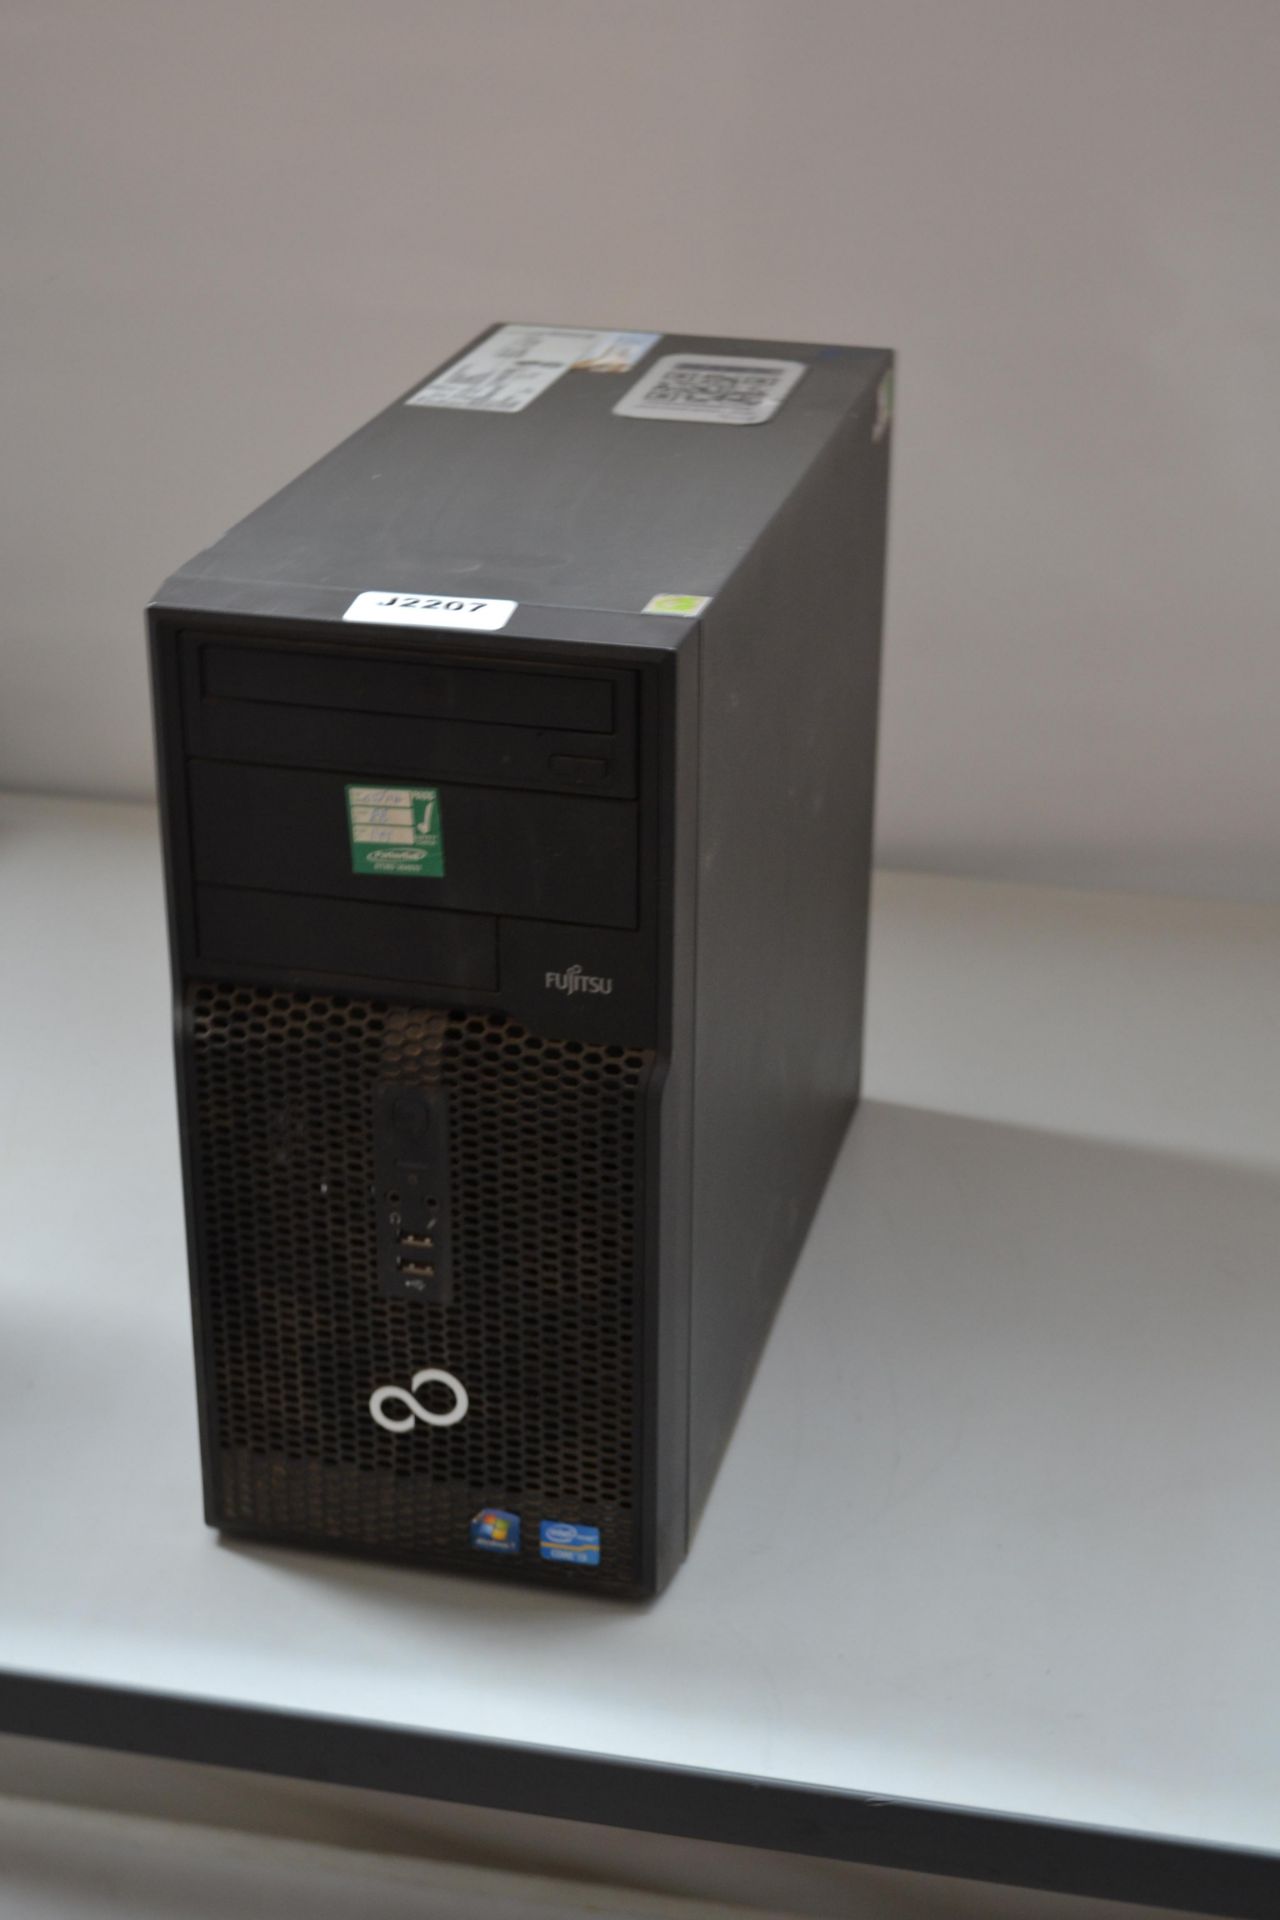 1 x Fujitsu Esprimo P400 Desktop Computer - Features Intel Core i3-2130 3.4ghz Processor and 4gb - Image 3 of 3